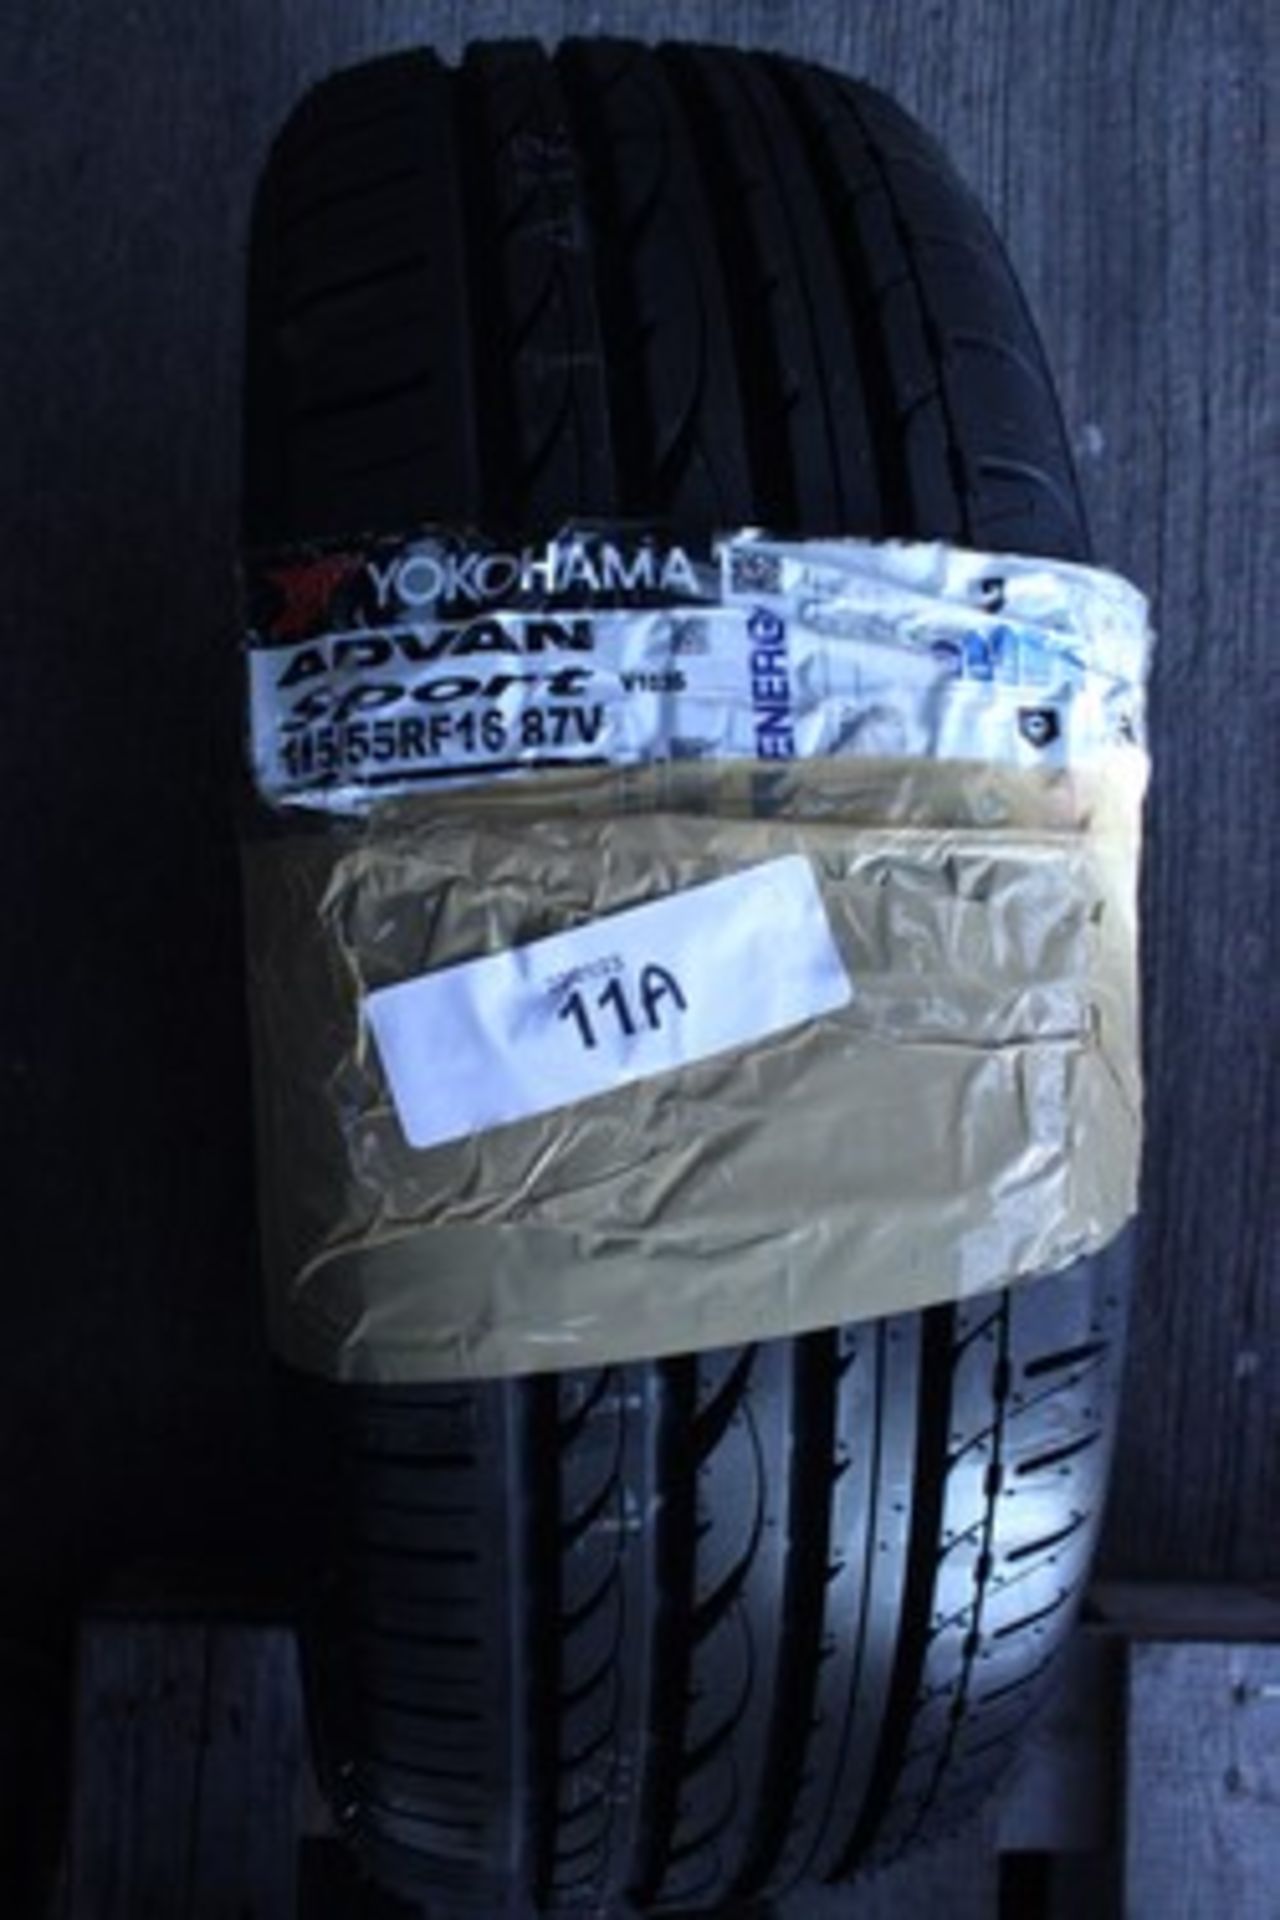 1 x Yokohama Advan Sport tyre, size 195/55RF16 - New with label (open shed)